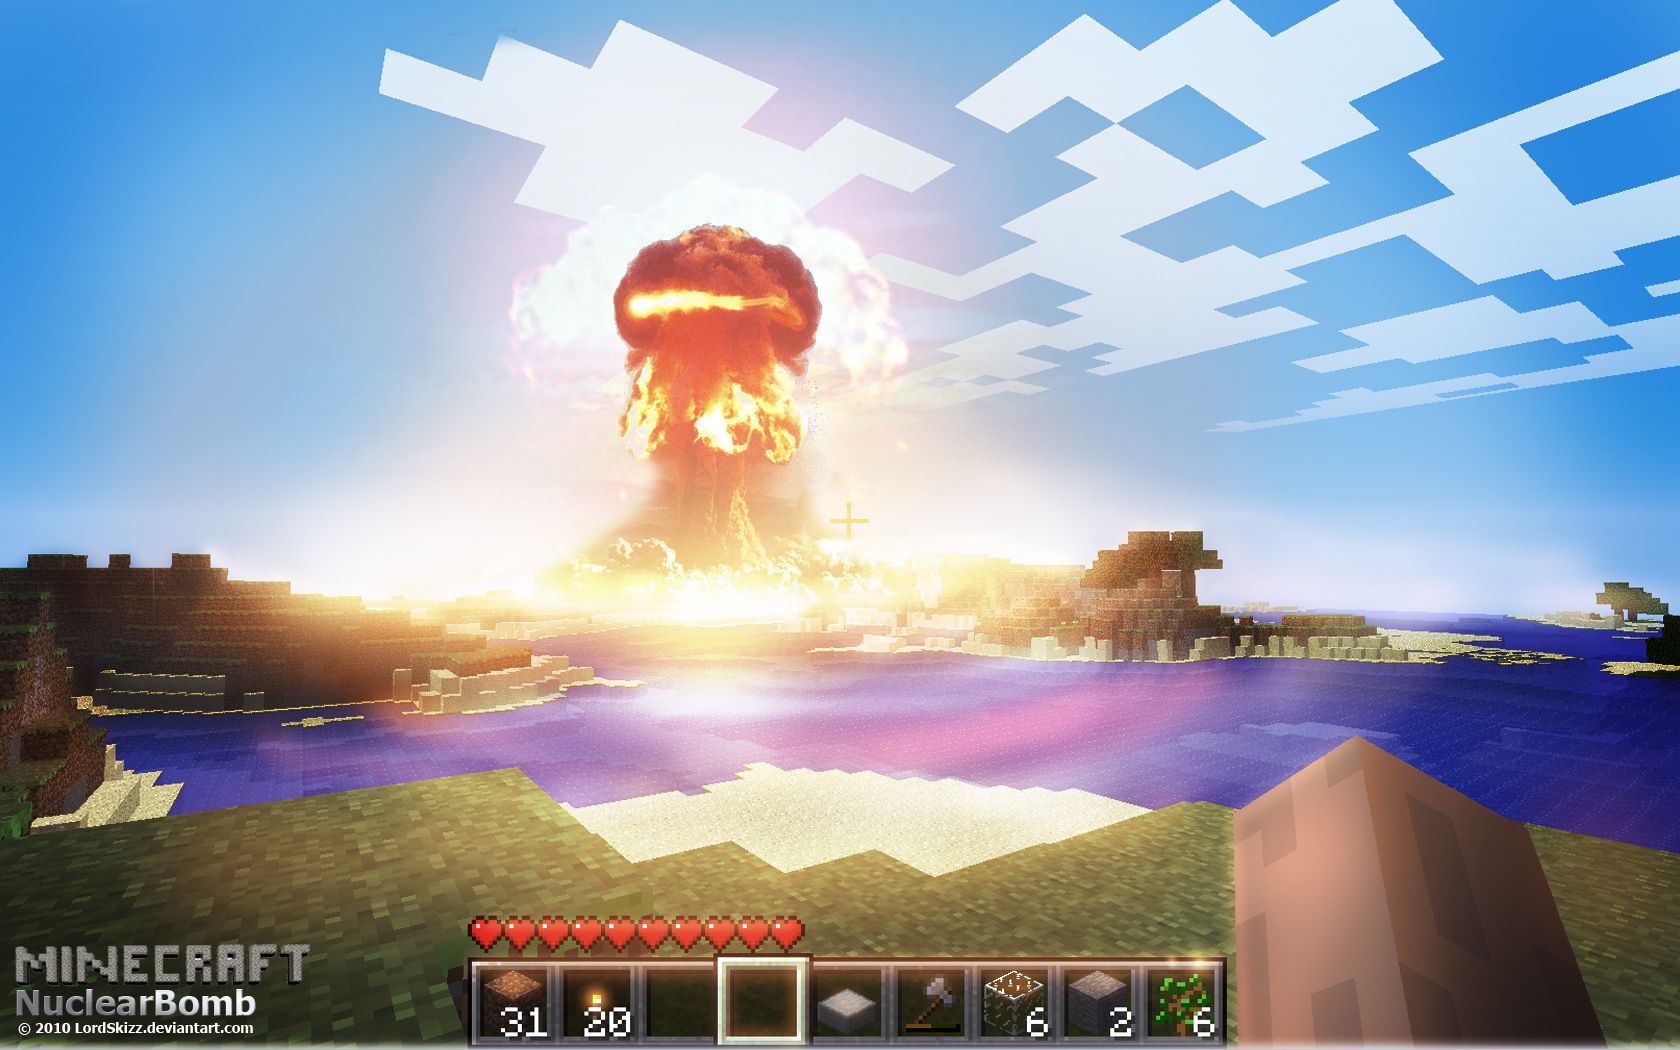 Minecraft Nuclear Bomb Wallpaper | LOLd | Wallpaper - Funny ...